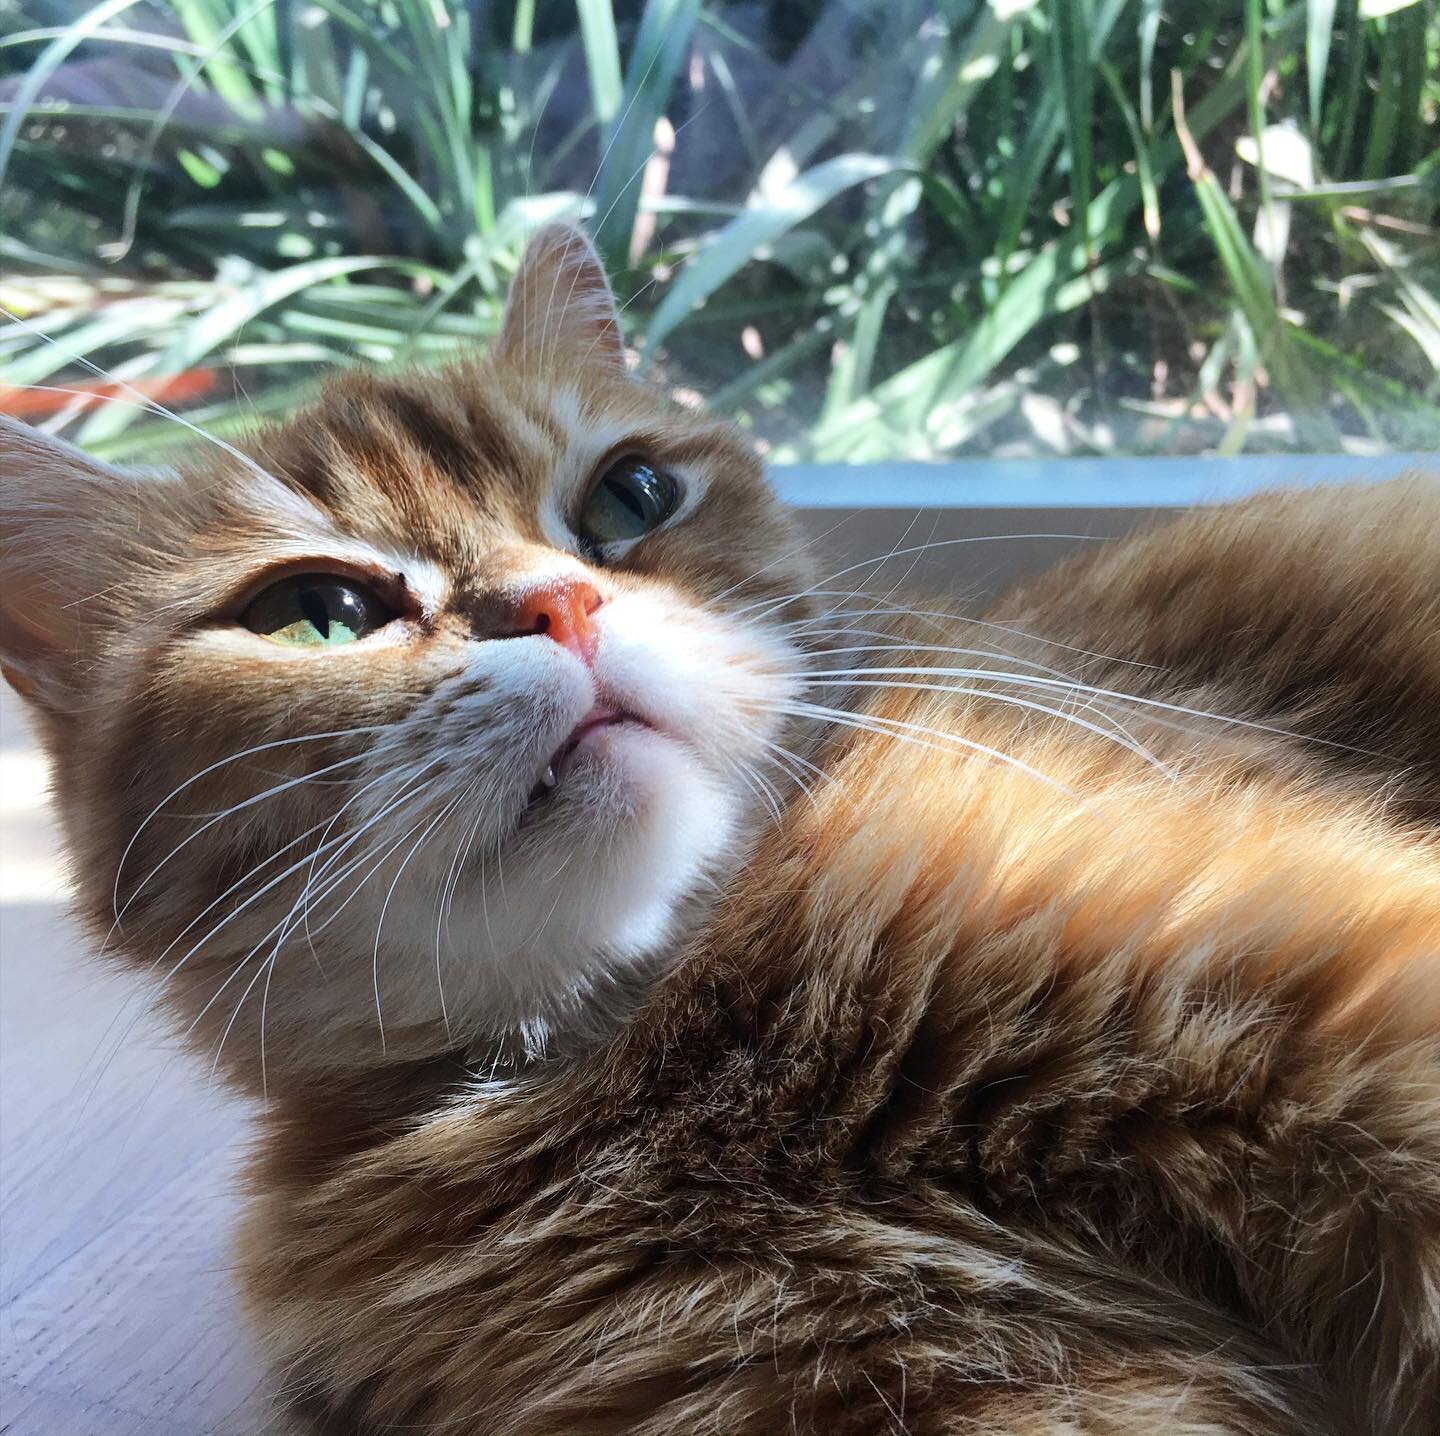 Potey puss posing next her jungle #poser #gingercat #gingercatsofinstagram #dubaicats #catsindubai #catsofinstagram #cats_of_instagram #catstagram #catlover #catlife